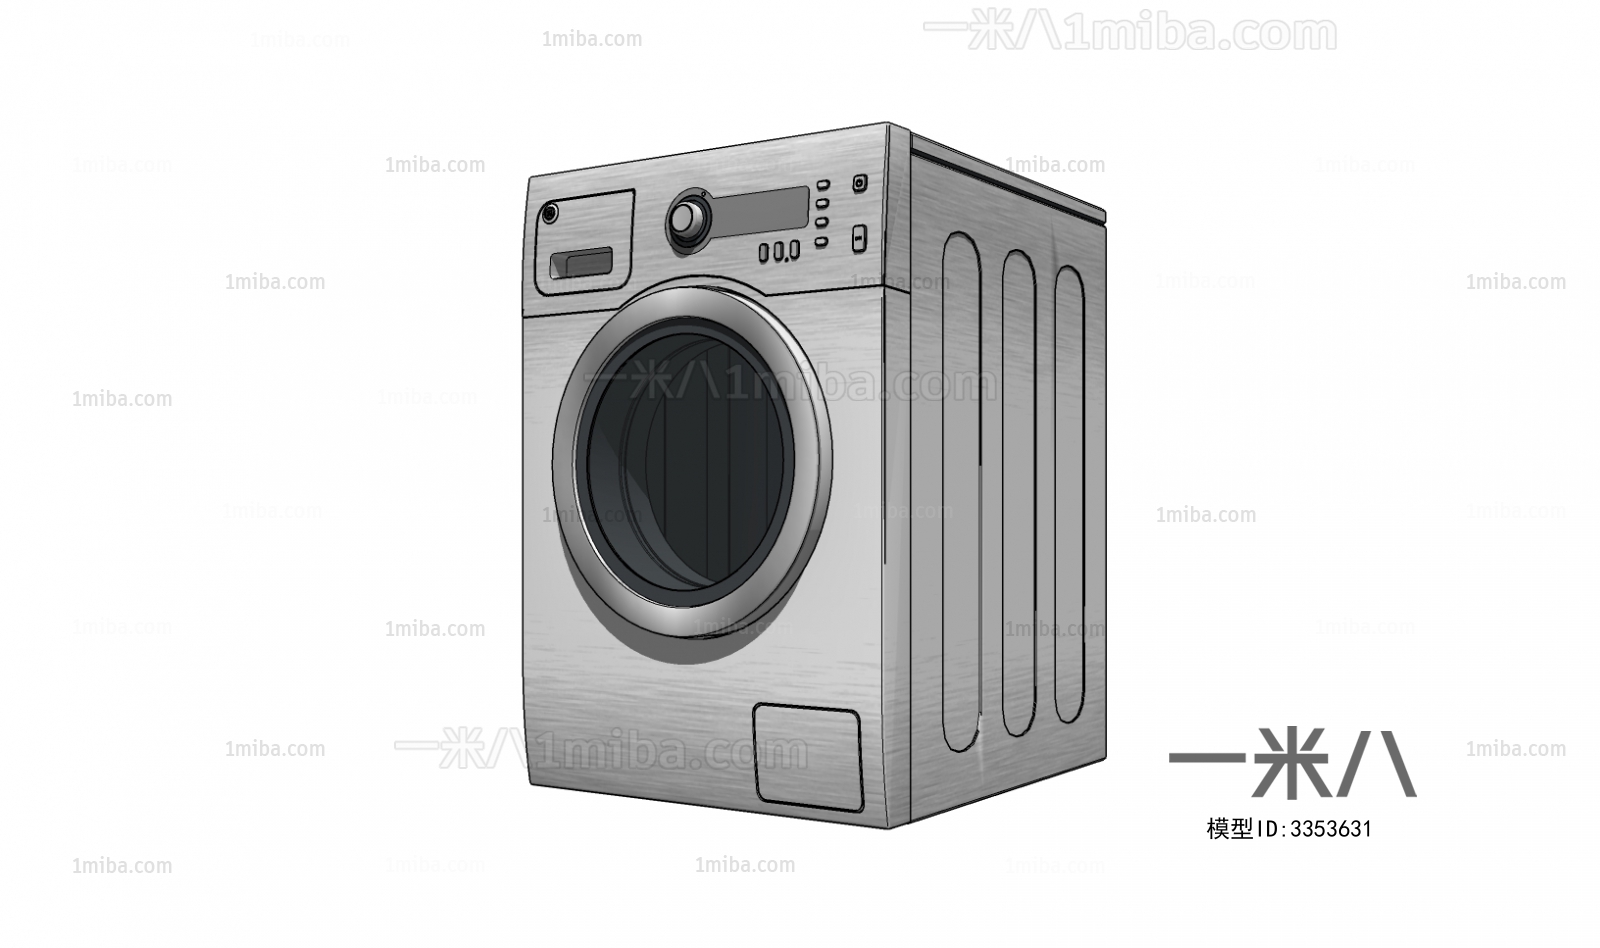 cad 自动洗衣机设计图__传统文化_文化艺术_设计图库_昵图网nipic.com